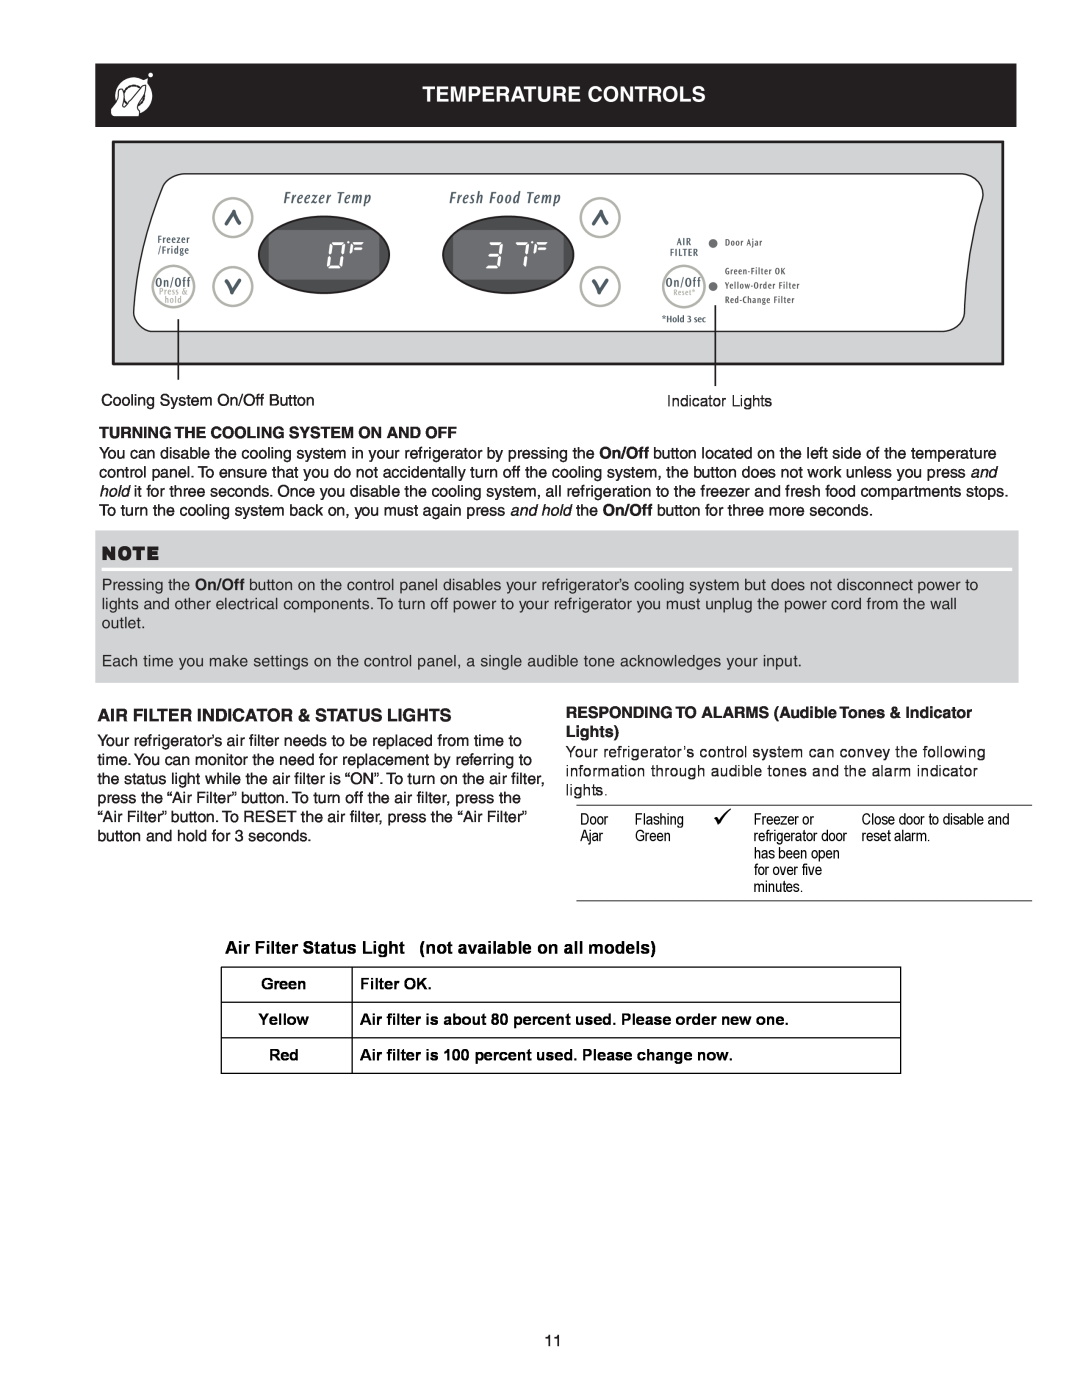 Crosley 241024401 manual Temperature Controls, Air Filter Indicator & Status Lights, Green, Filter OK, Yellow 